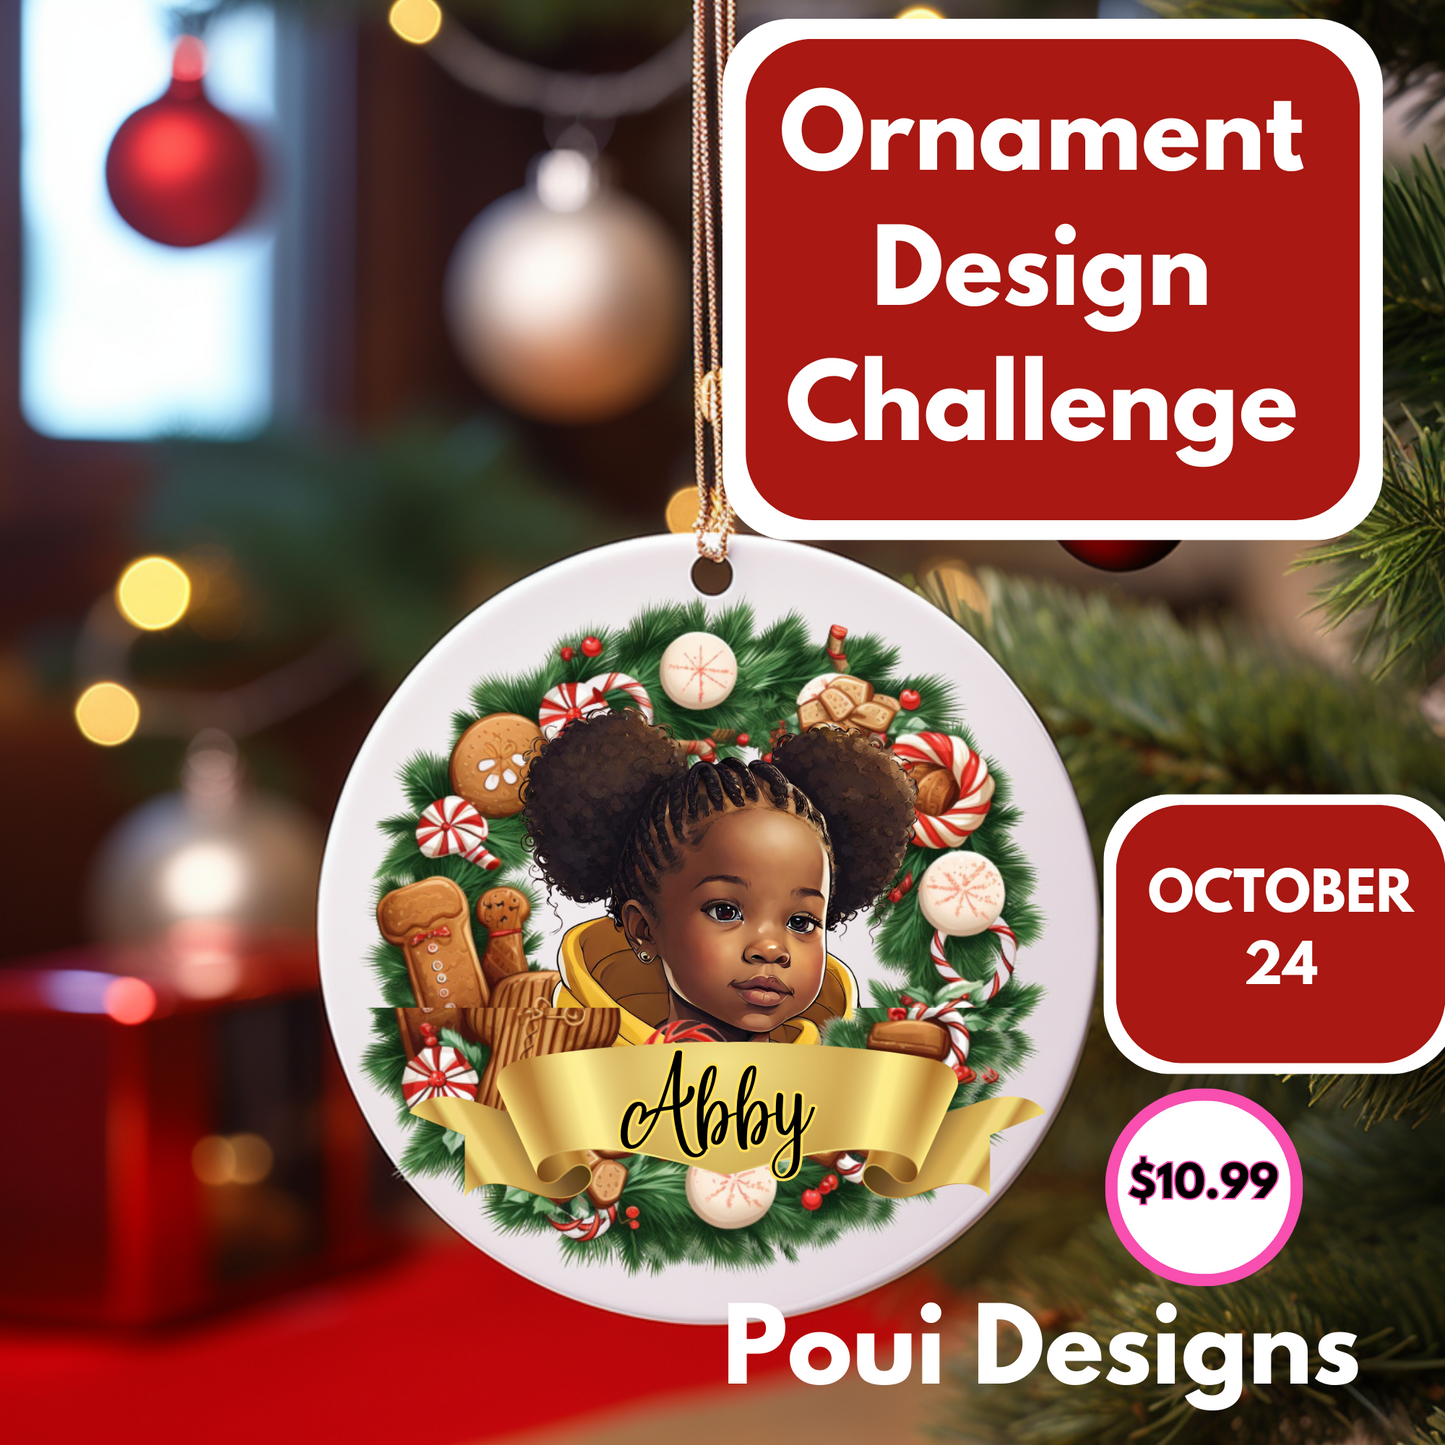 Ornament Design Challenge October 24